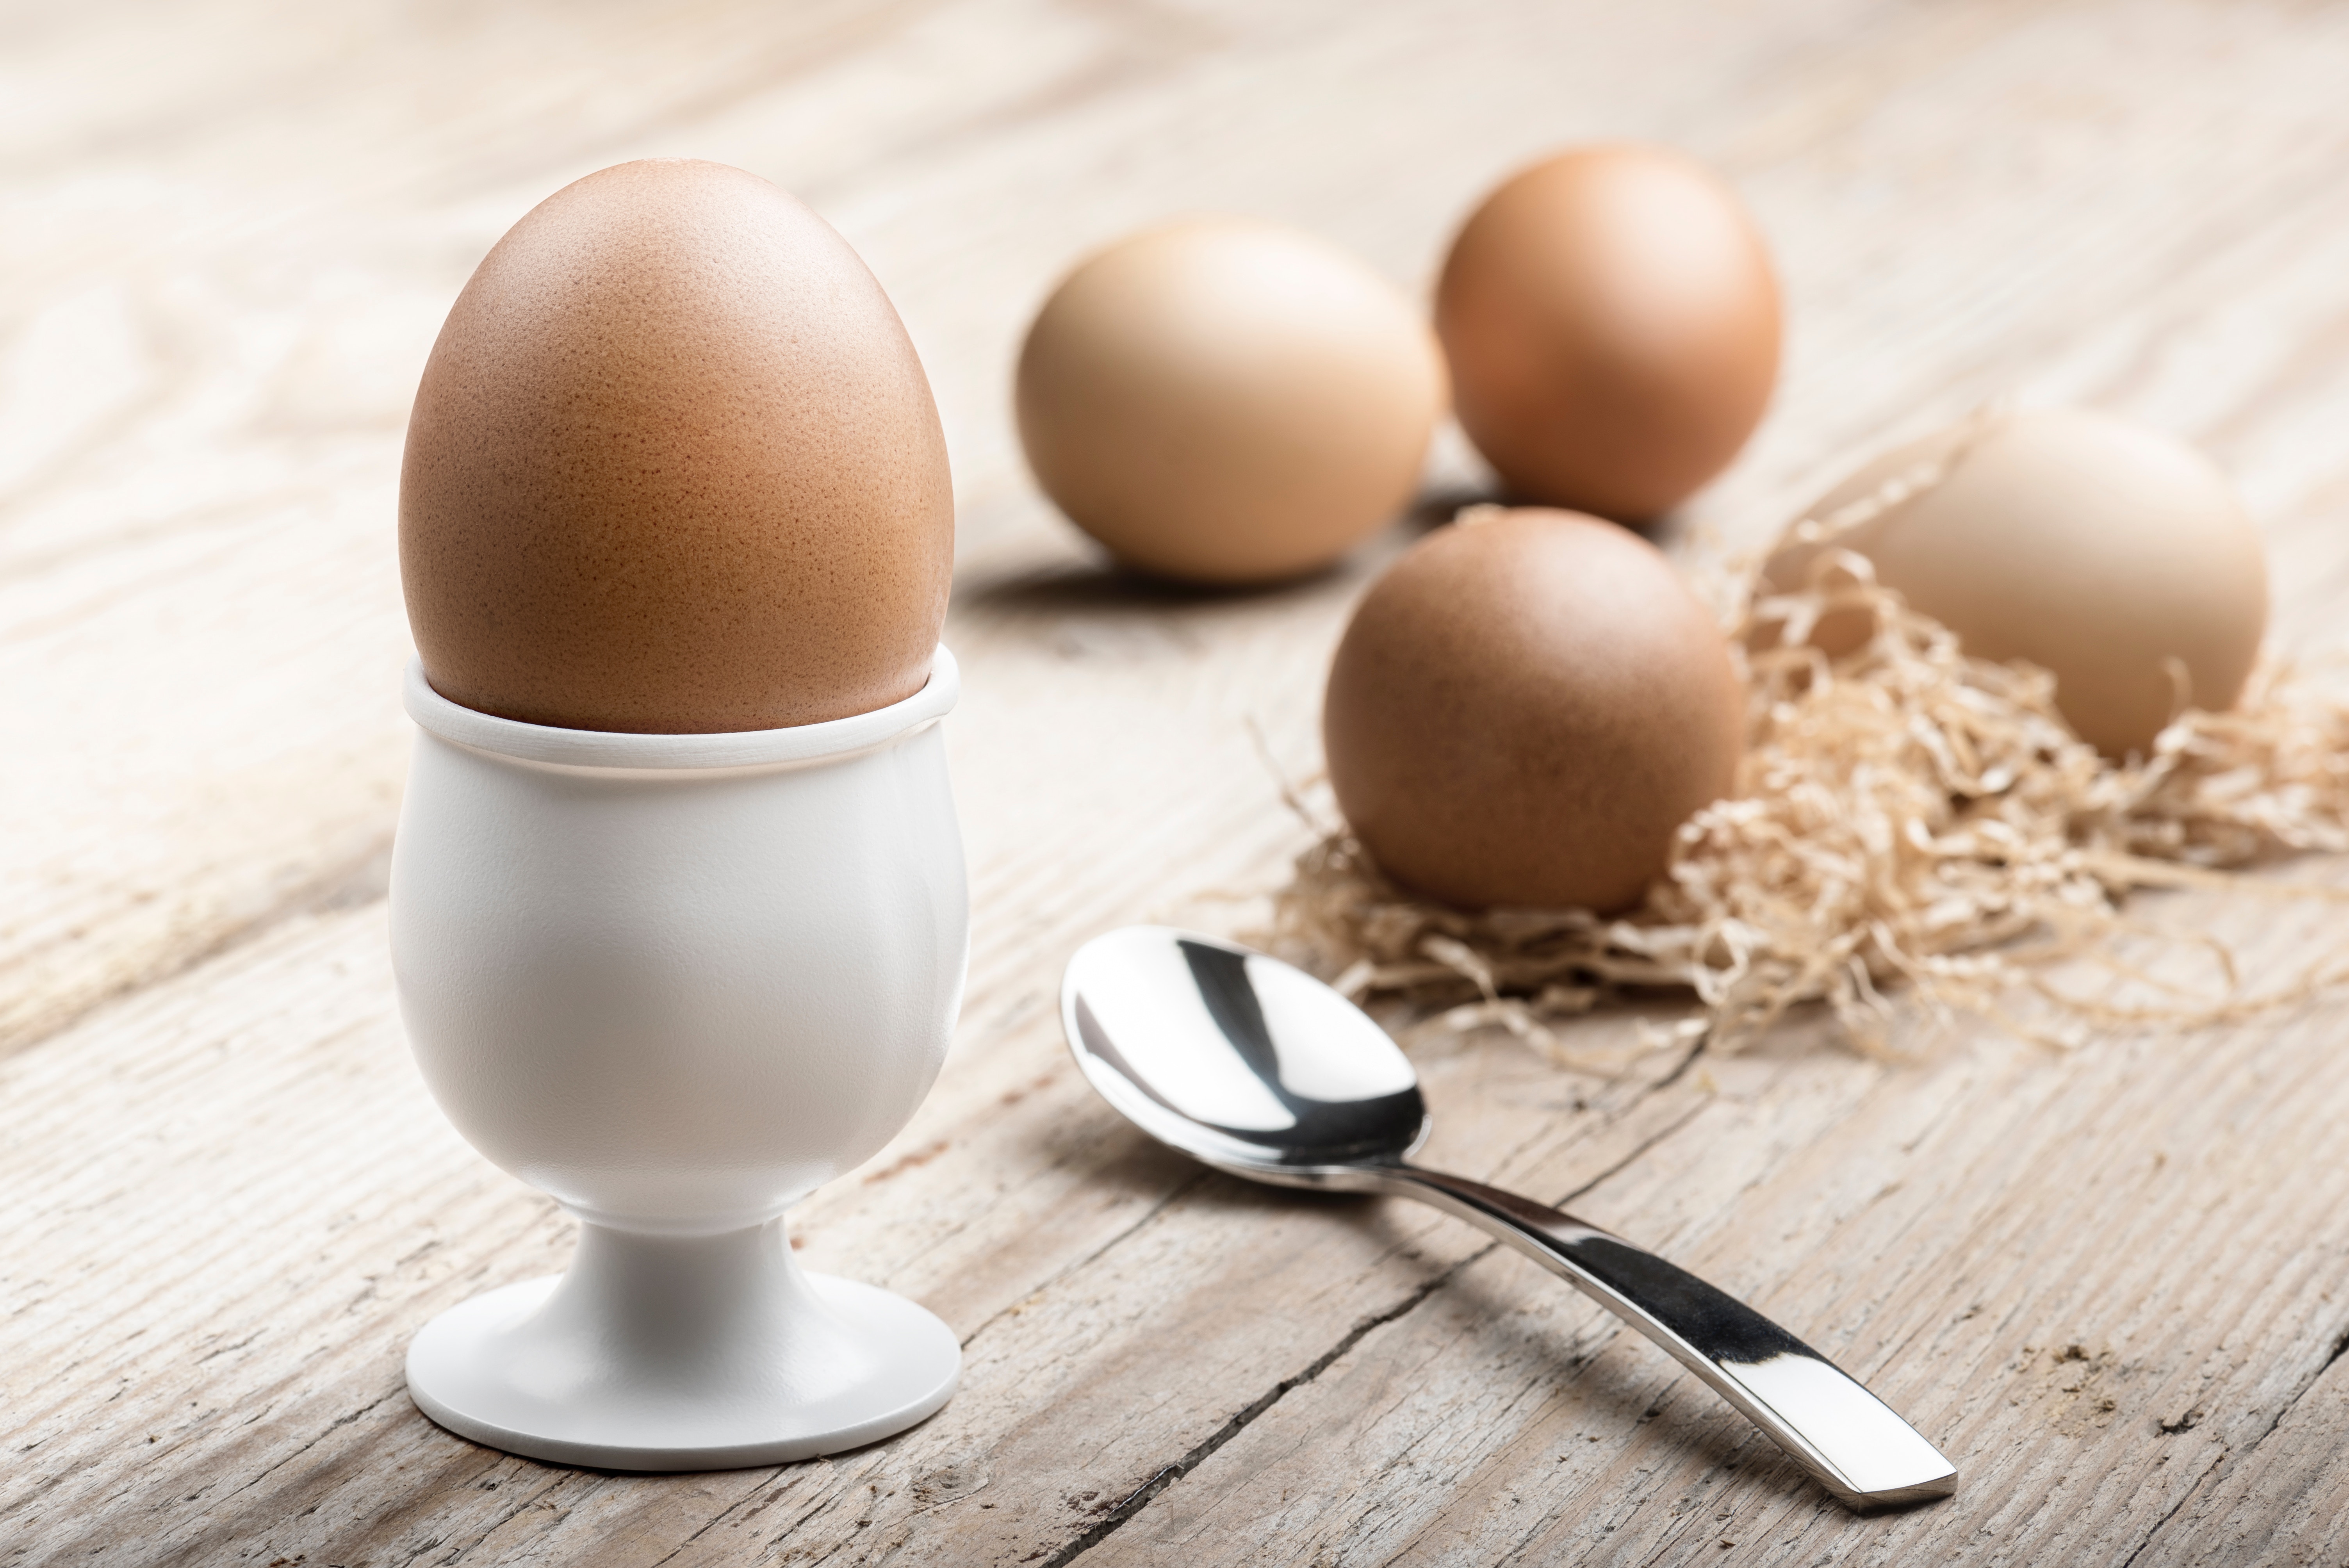 Egg | Cholesterol | 21 Day Full Body Cleanse